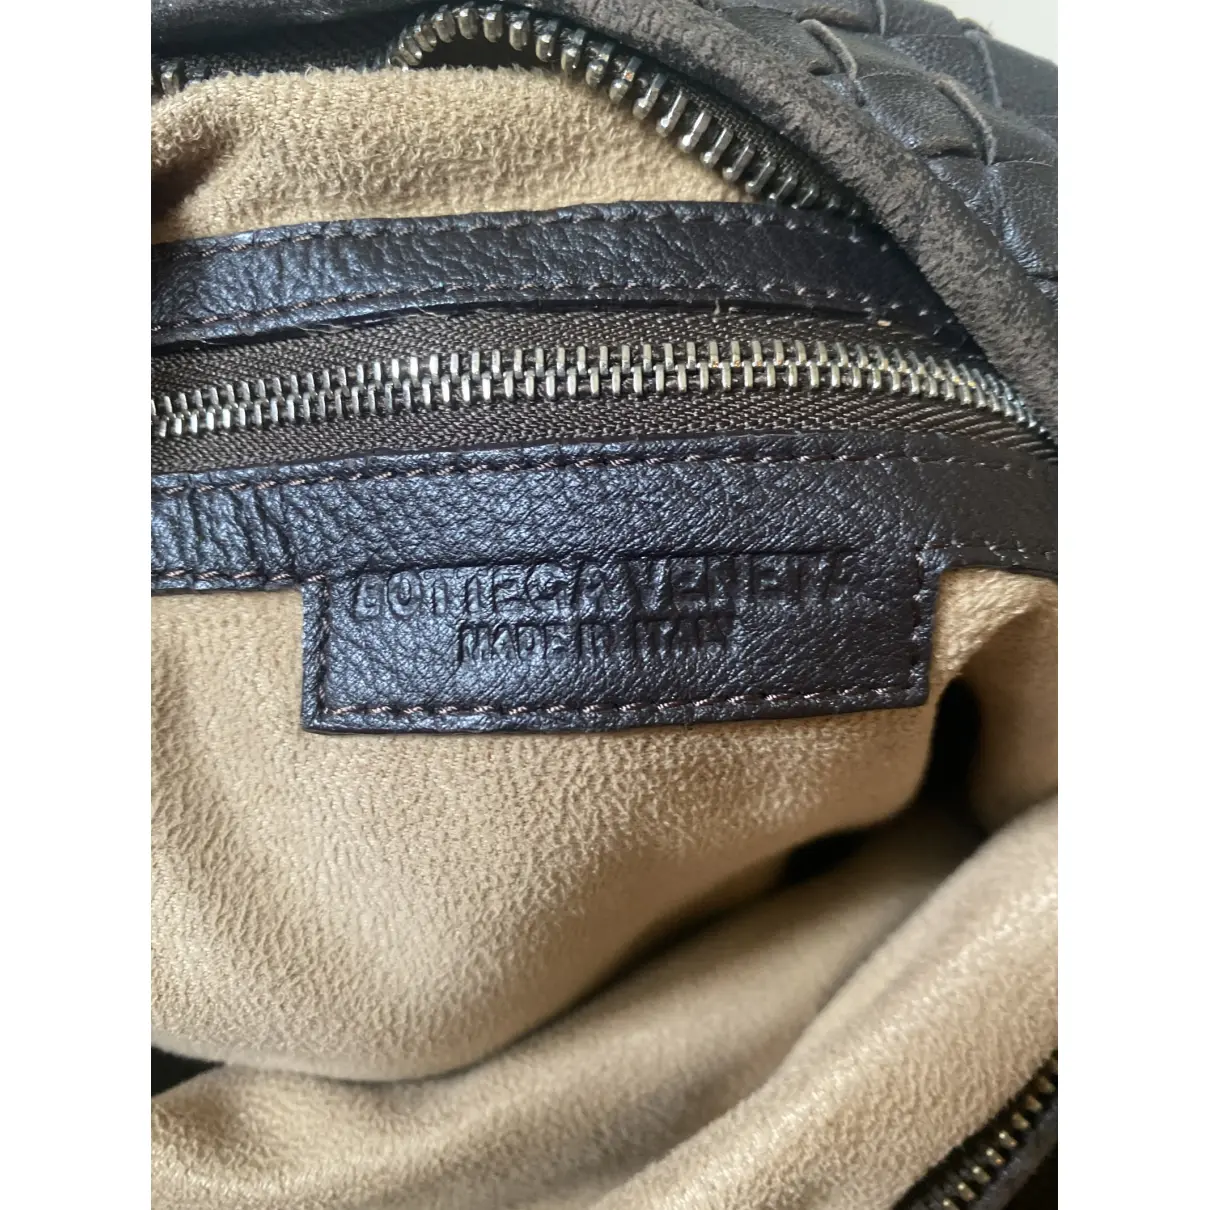 Veneta leather handbag Bottega Veneta